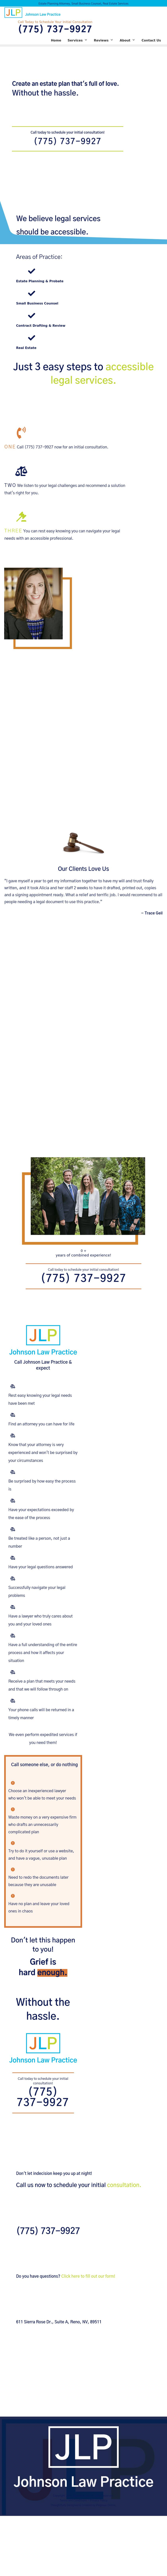 Johnson Law Practice - Reno NV Lawyers